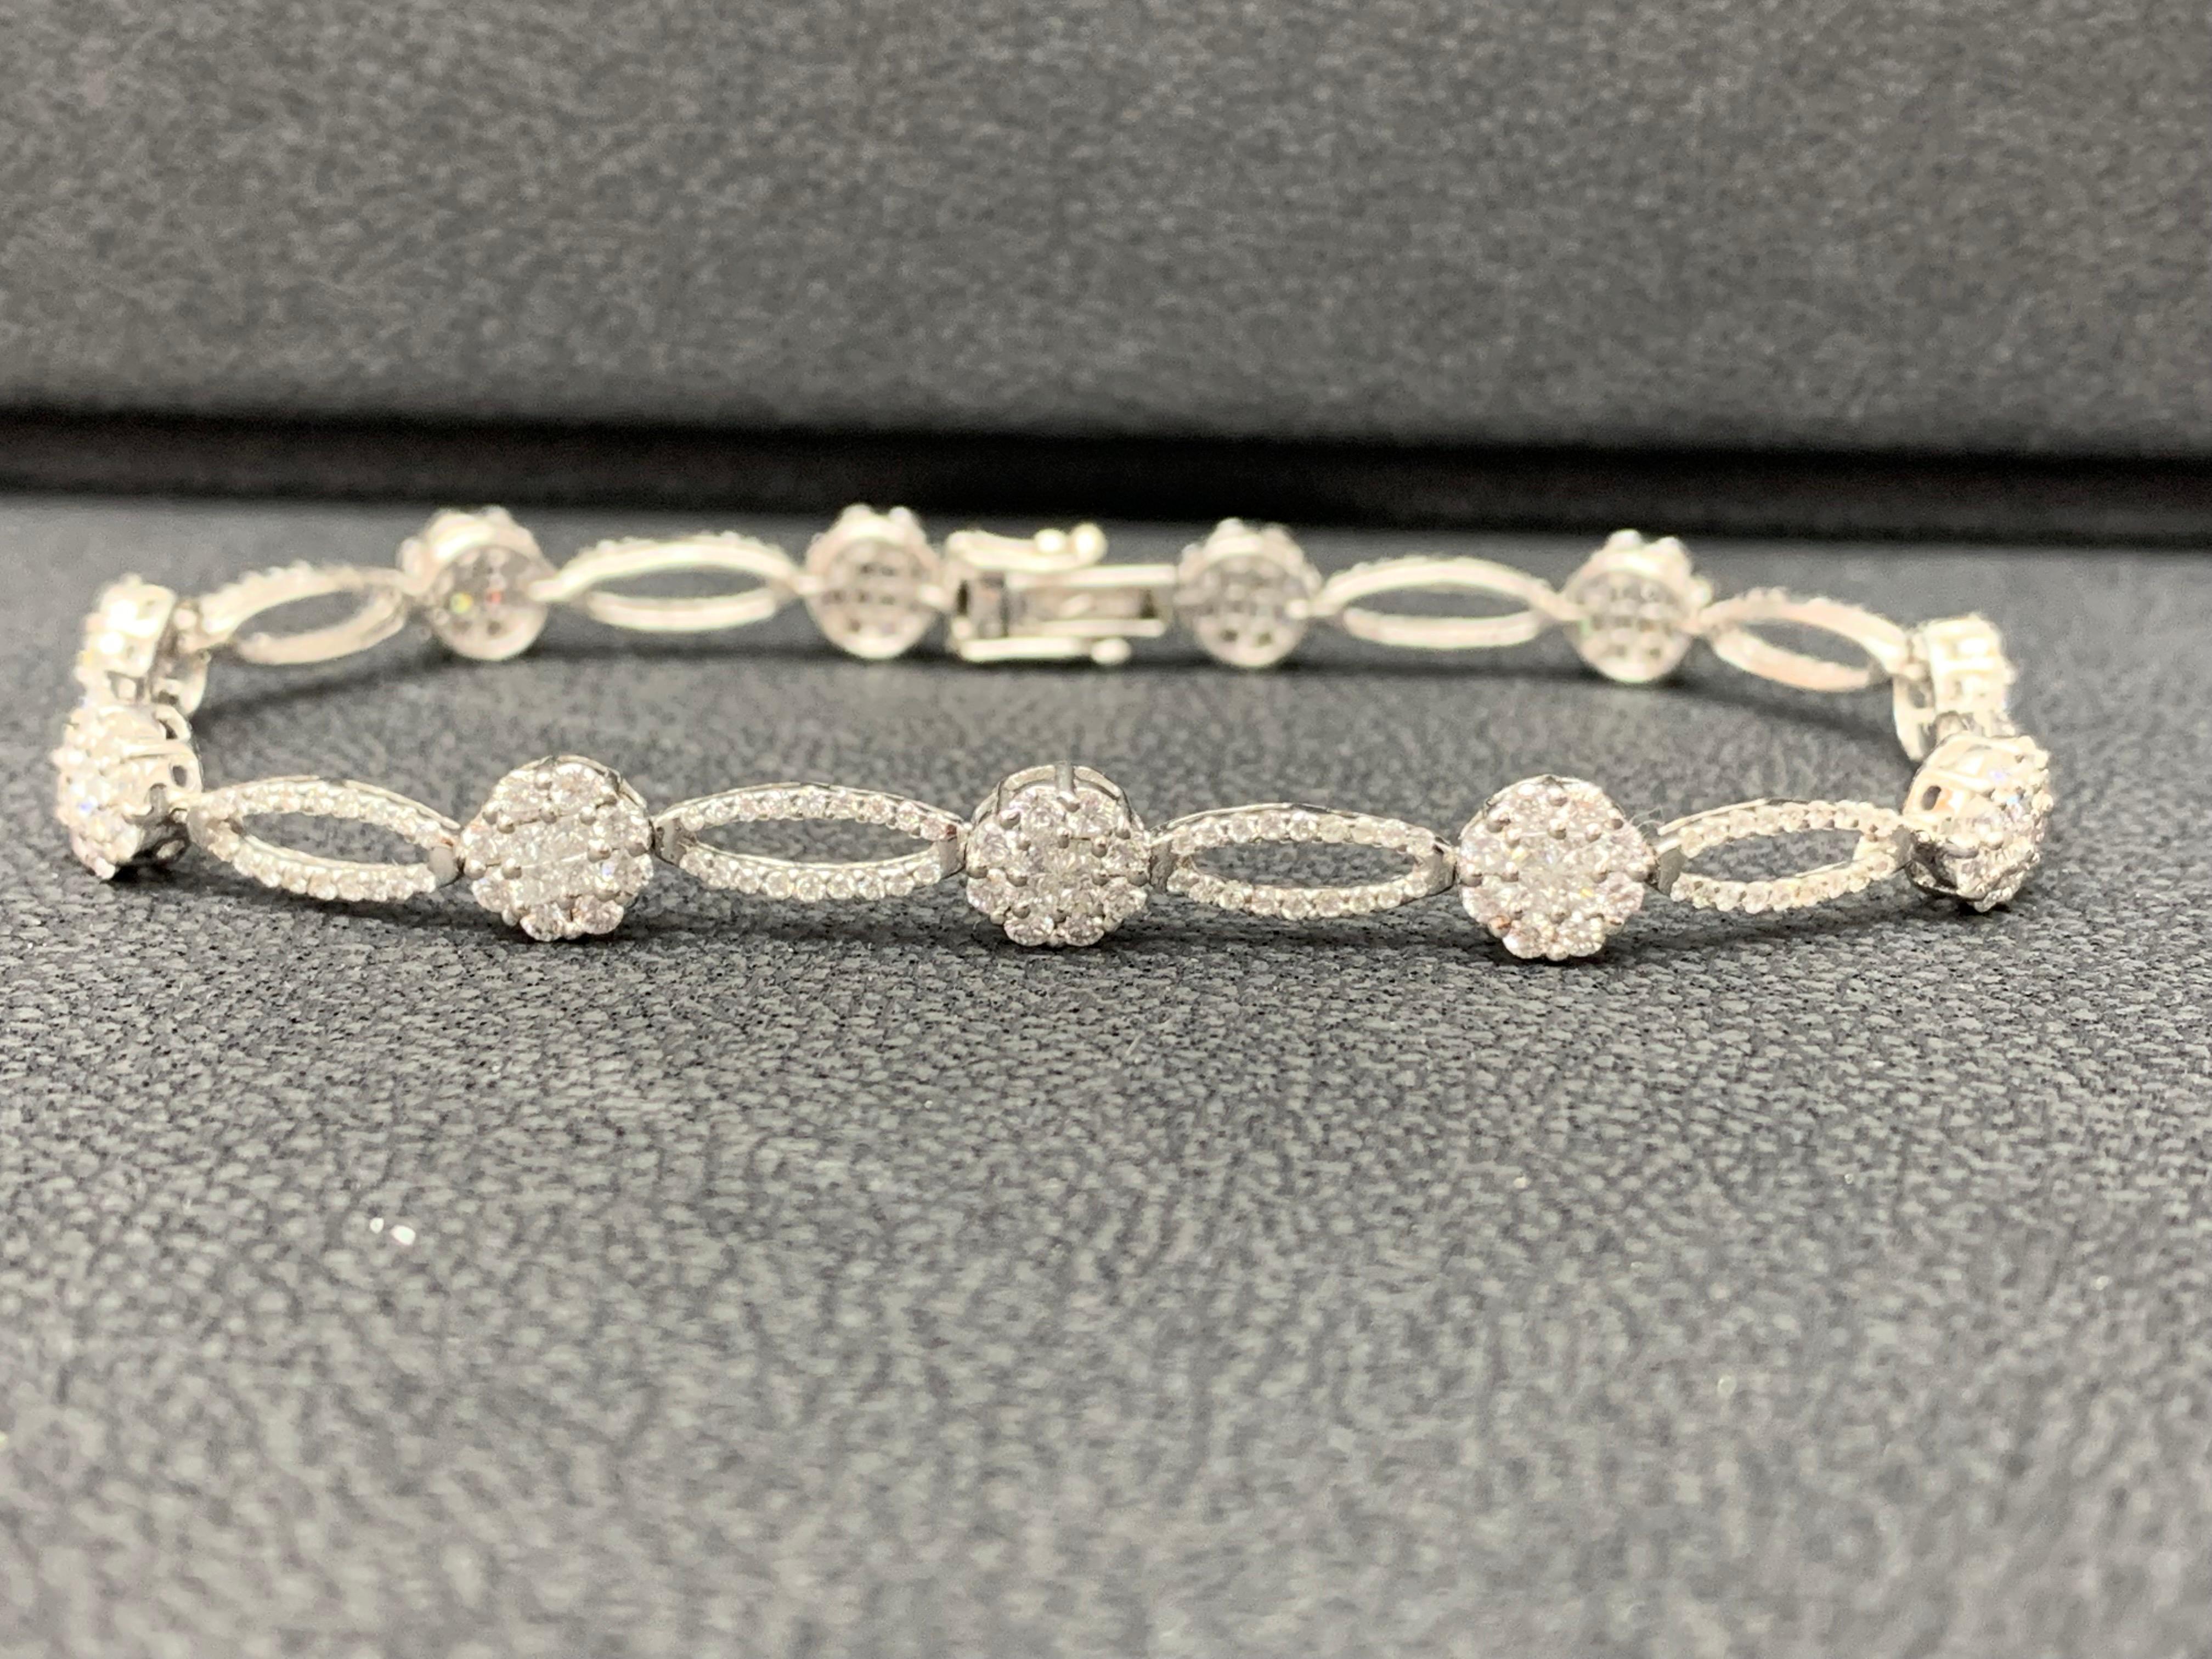 An antique Art Deco bracelet showcasing brilliant cut diamonds, set in an intricate open-work design made in 14k white gold. Diamonds weigh 2.39 carats total.